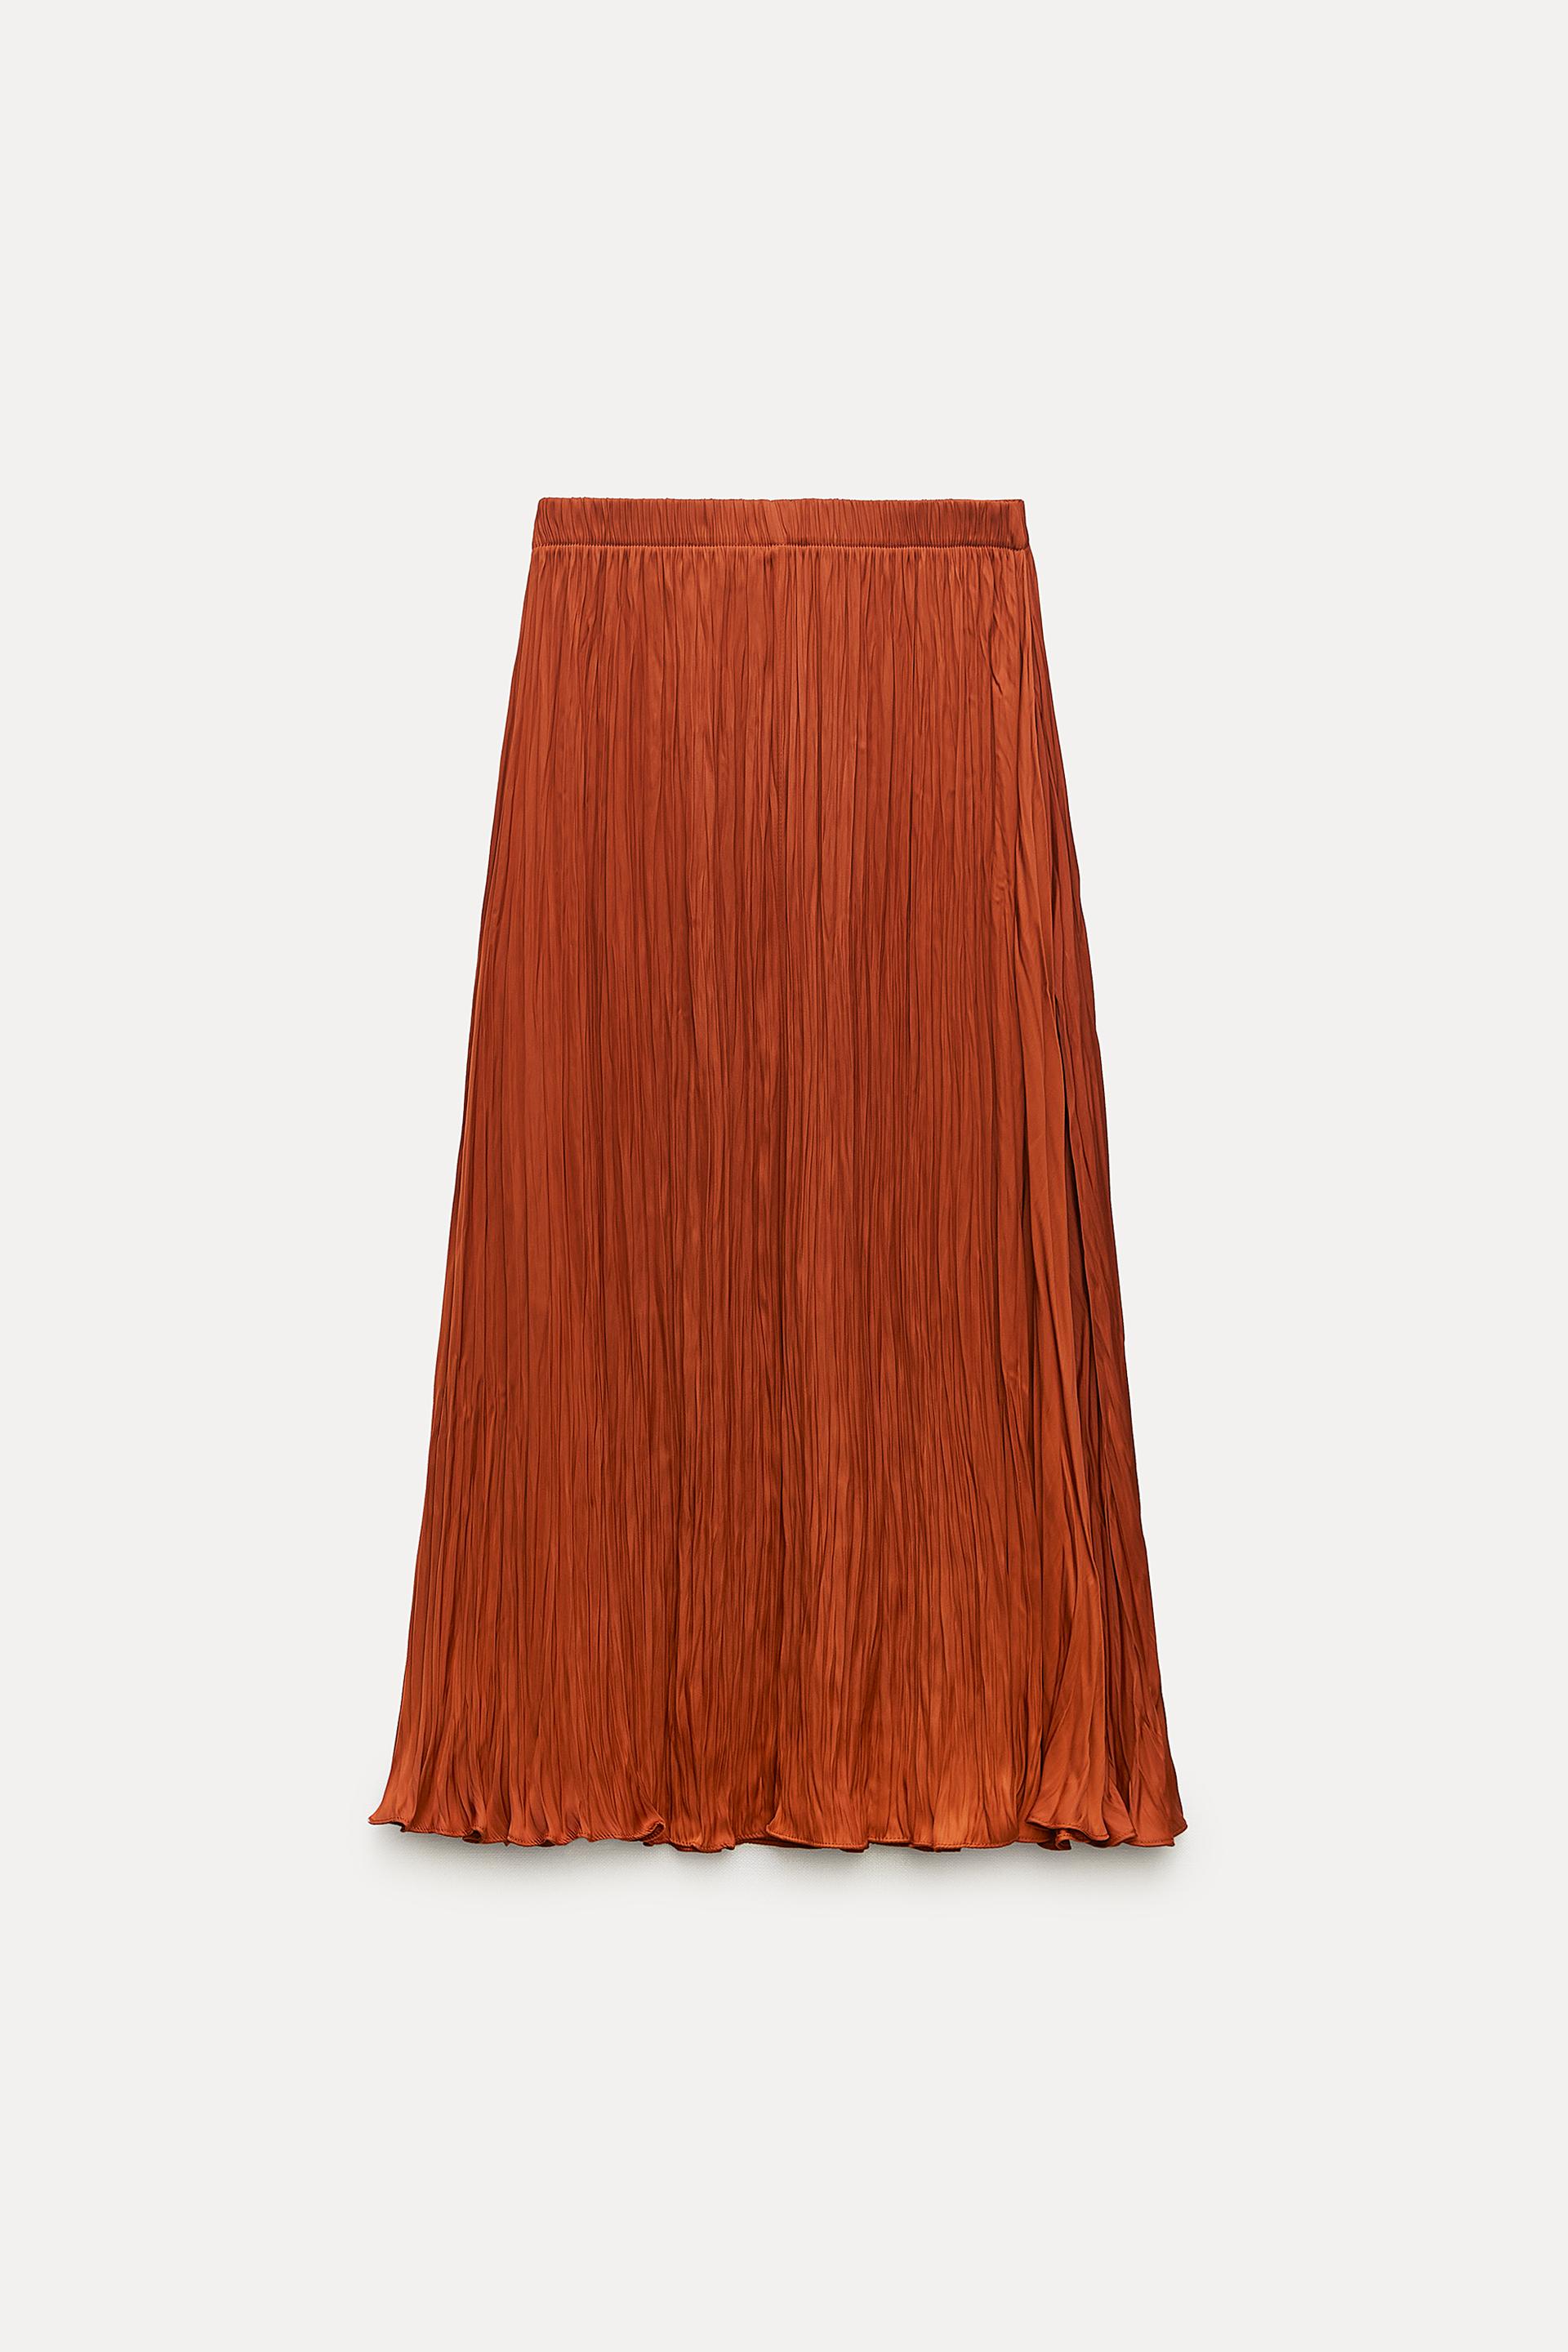 Zara Khaki Multicolored Pleated Midi Skirt Geometric Pattern Size